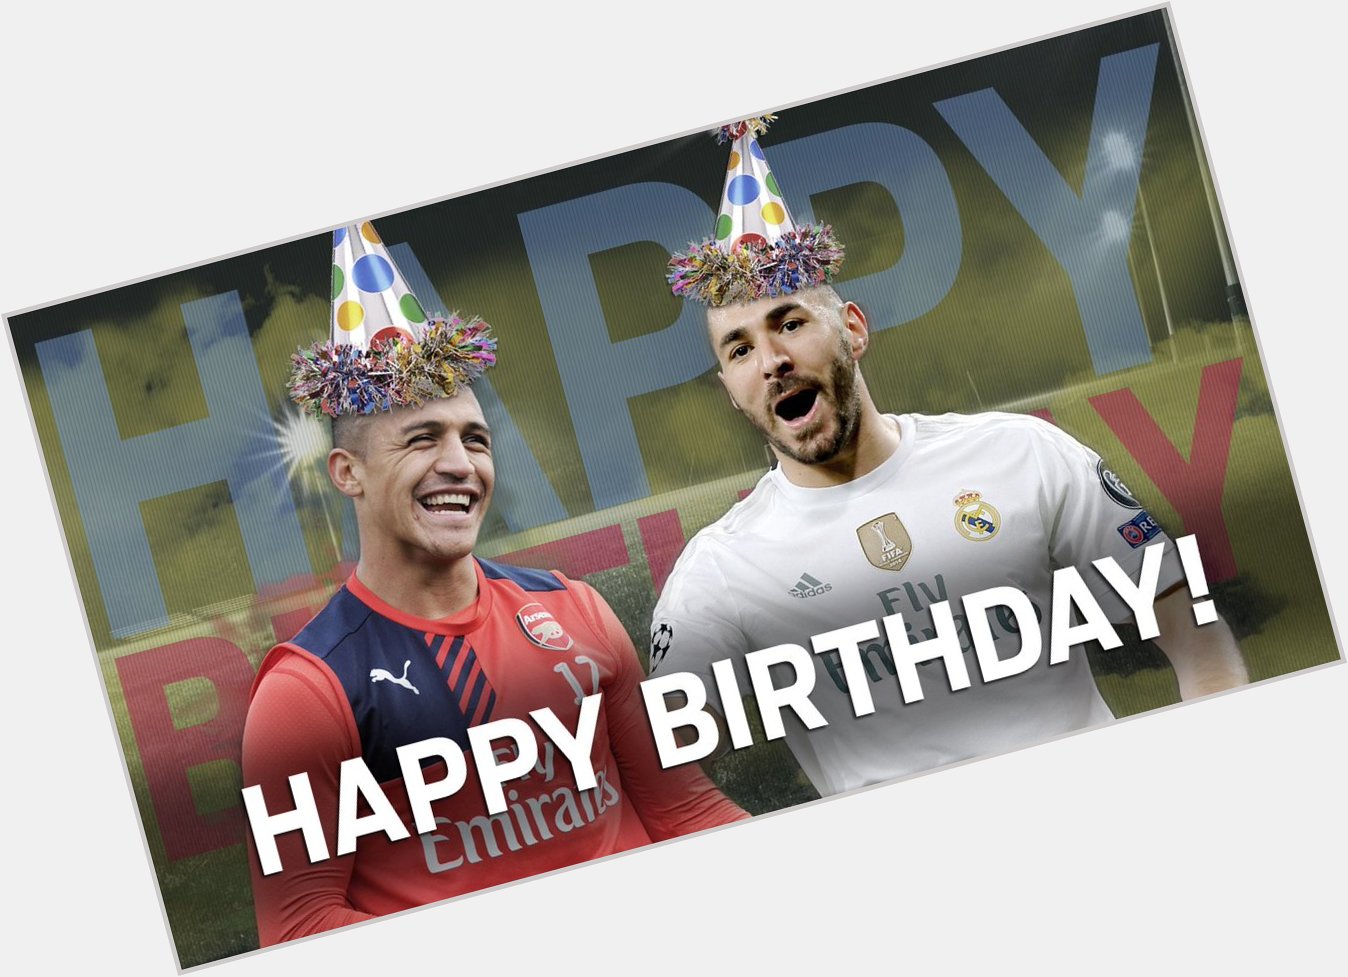 Happy birthday to Arsenal\s Alexis Sánchez (27) and Real Madrid\s Karim Benzema (28)! 